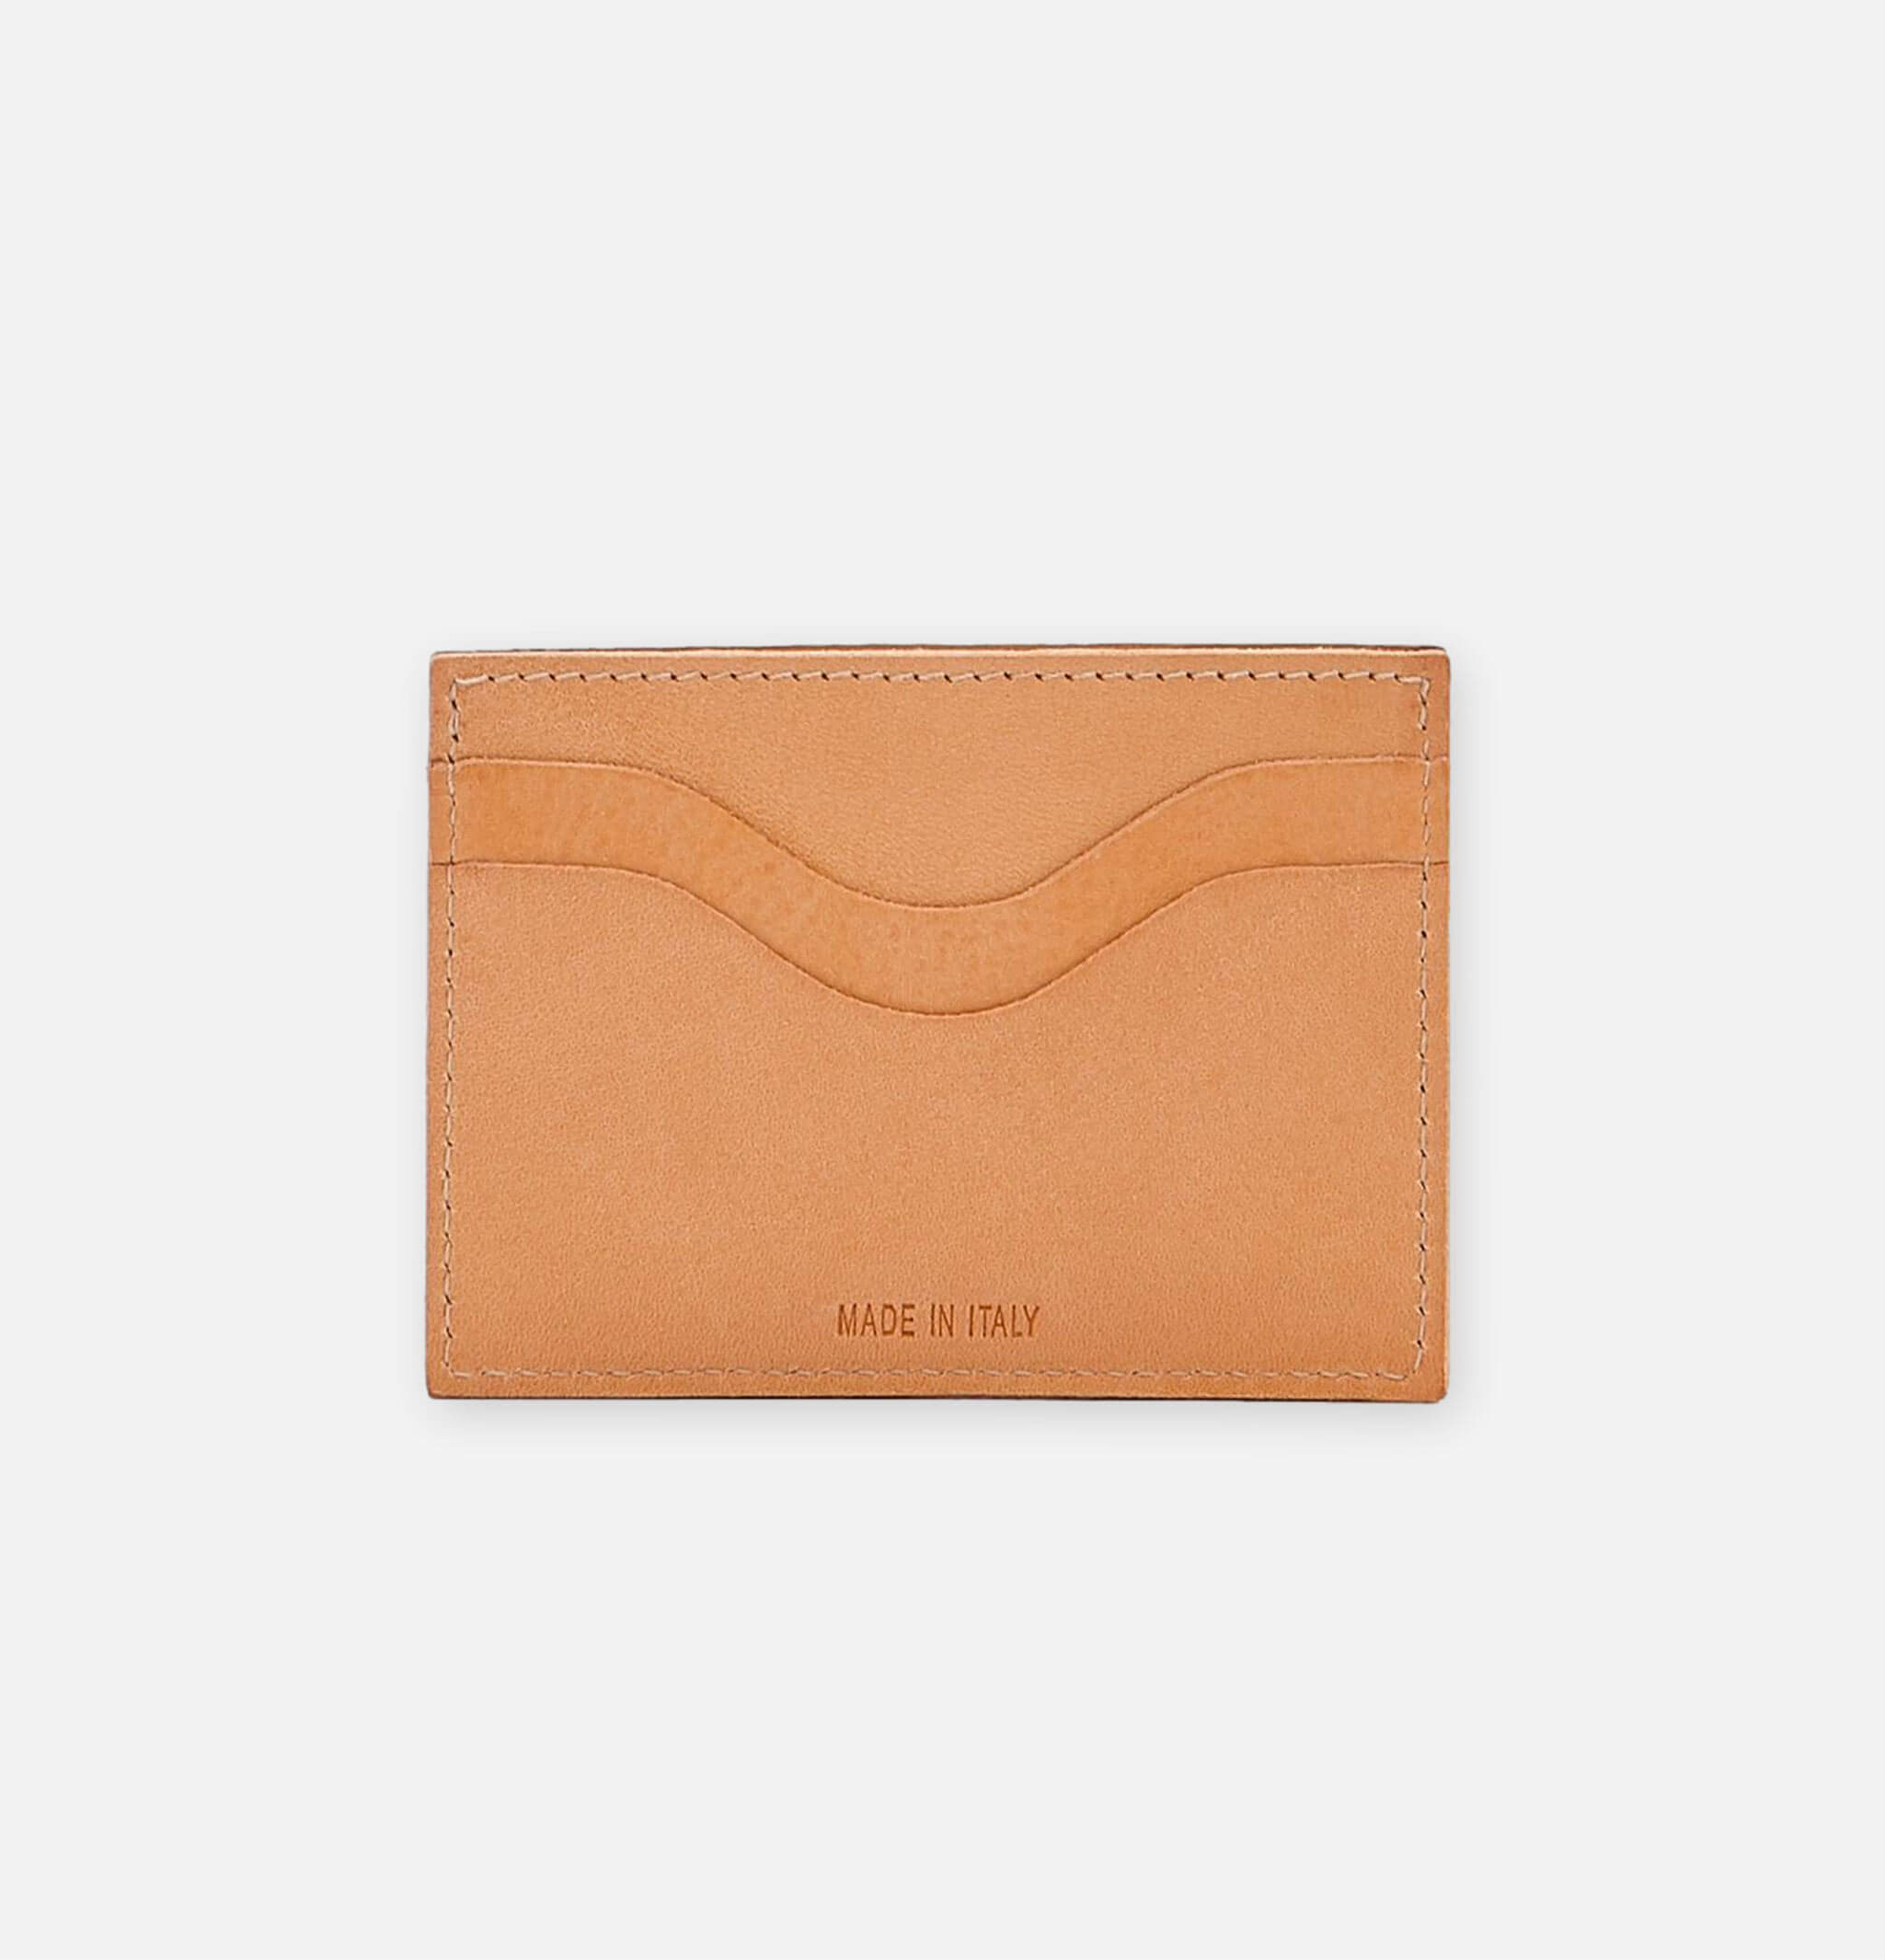 IL Bisonte Cardcase Natural Leather